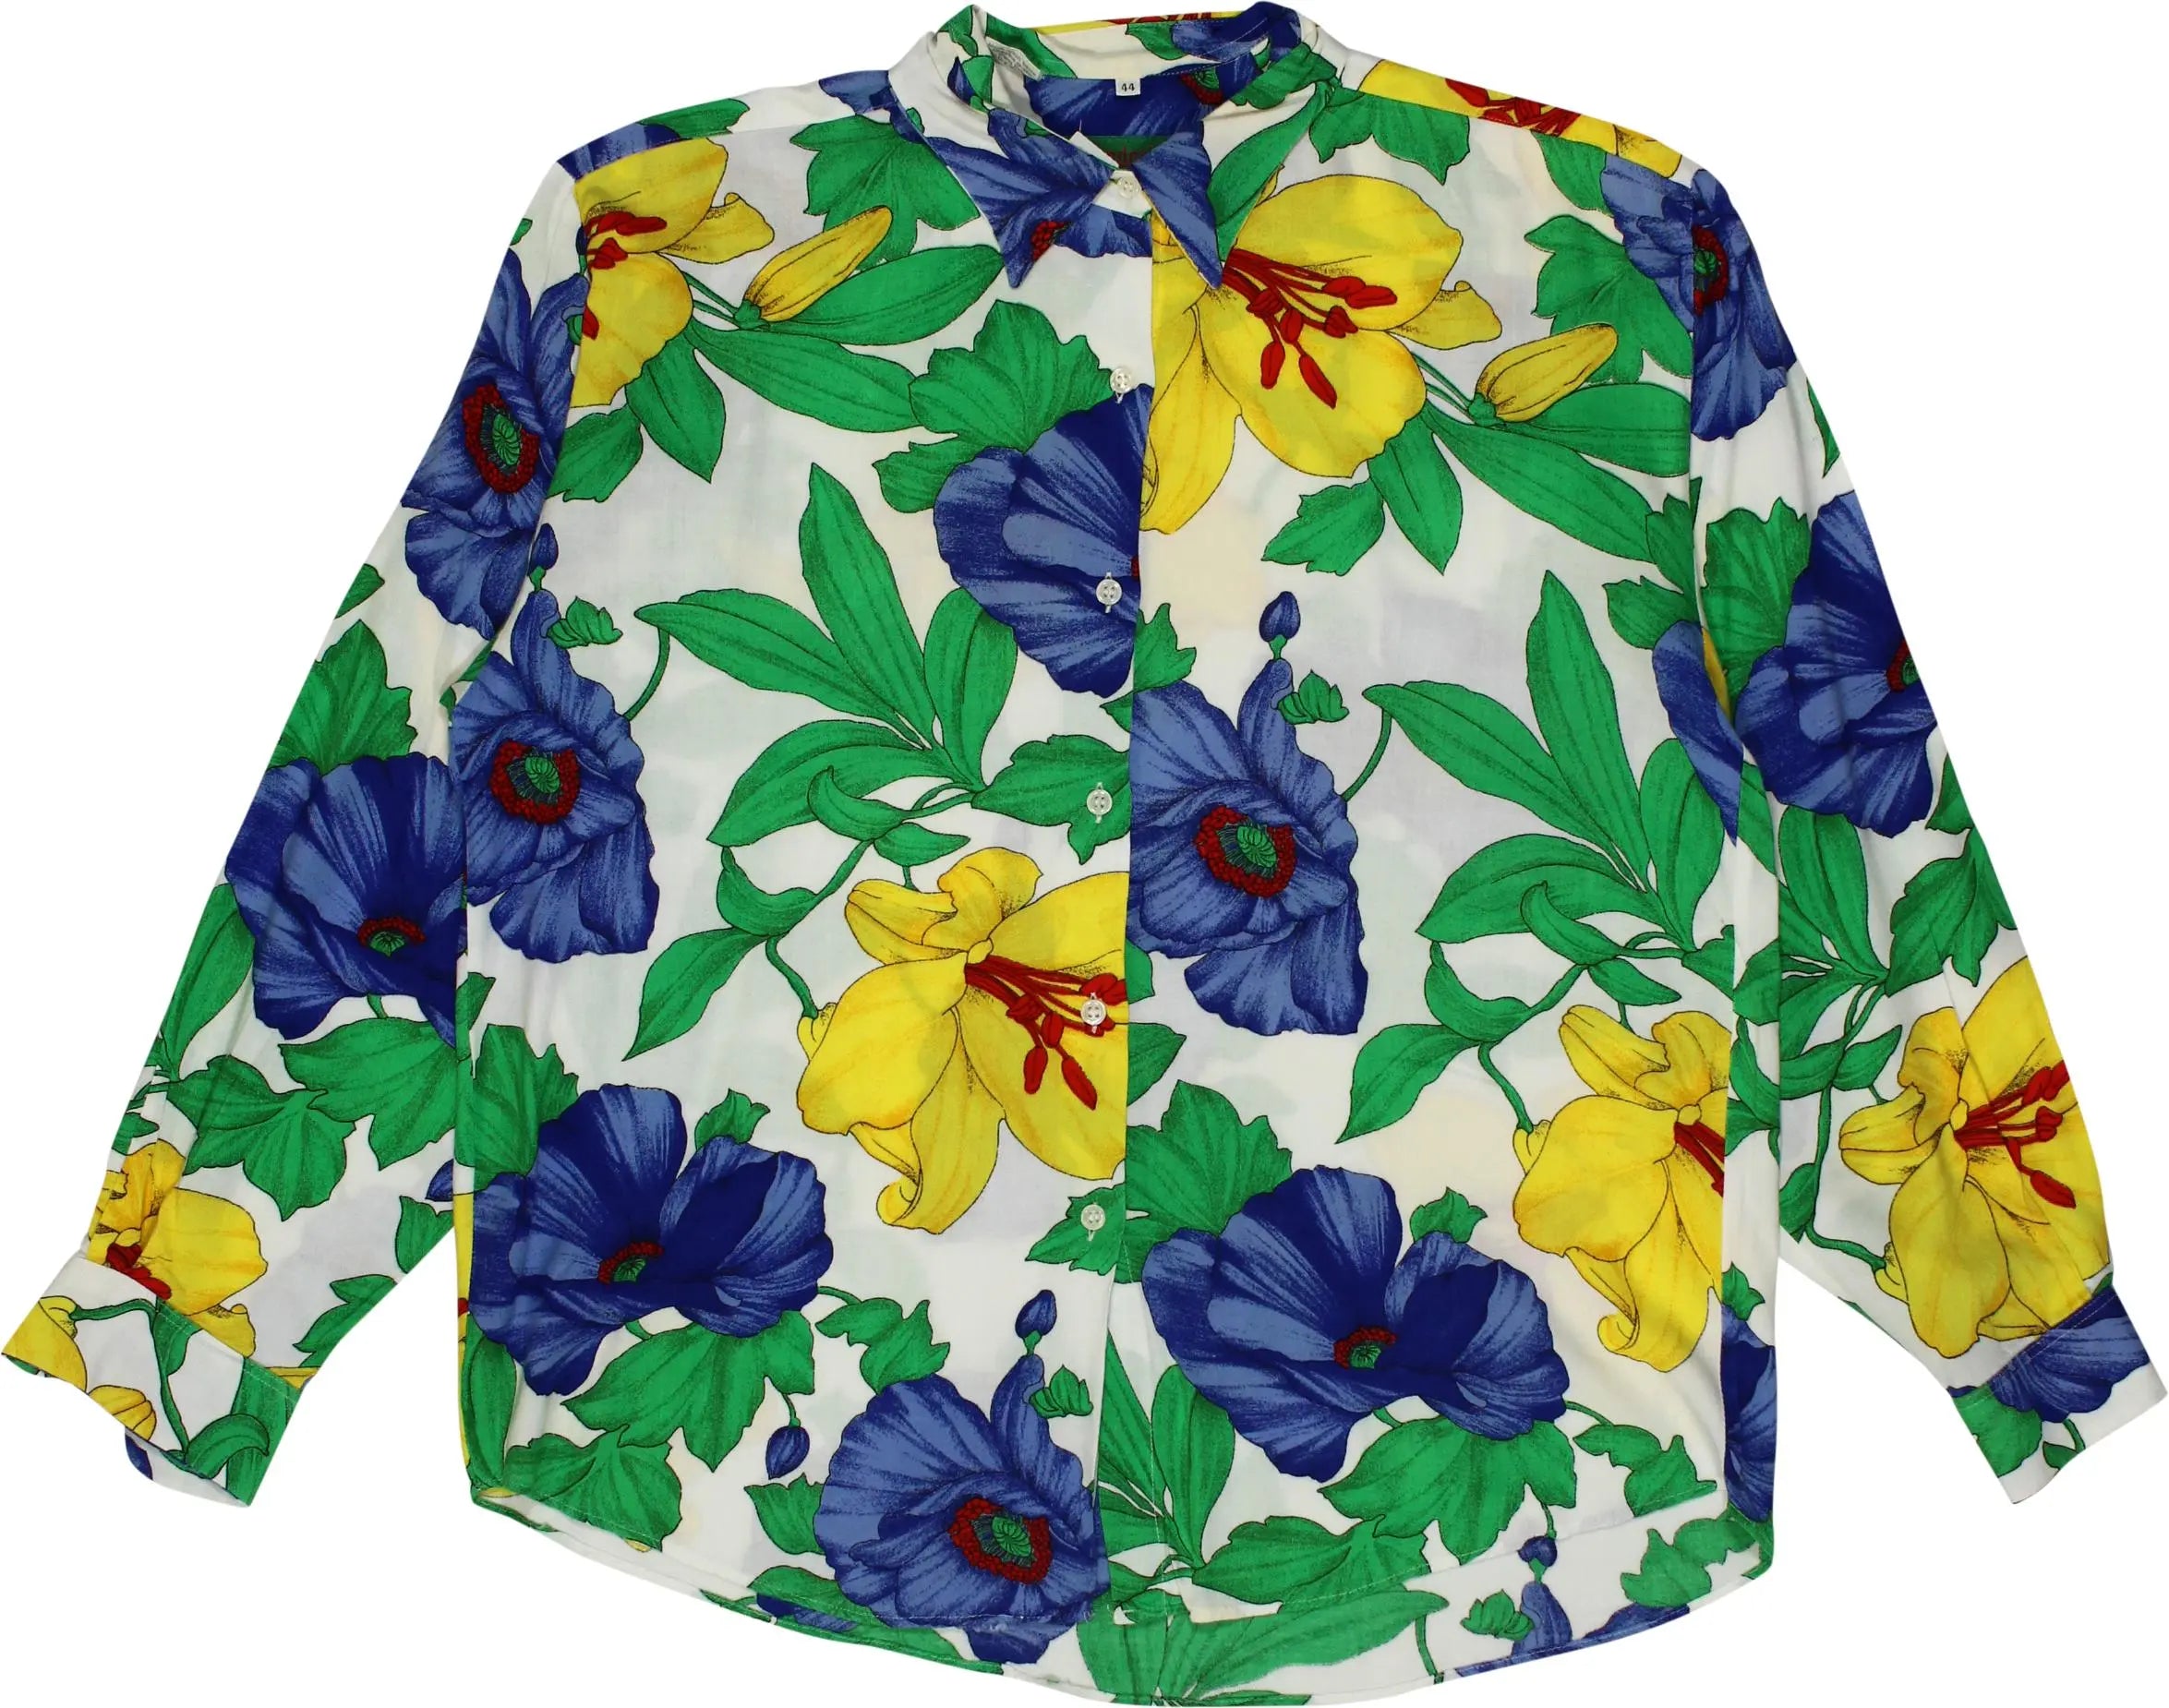 Mandarine Paris - Printed blouse- ThriftTale.com - Vintage and second handclothing